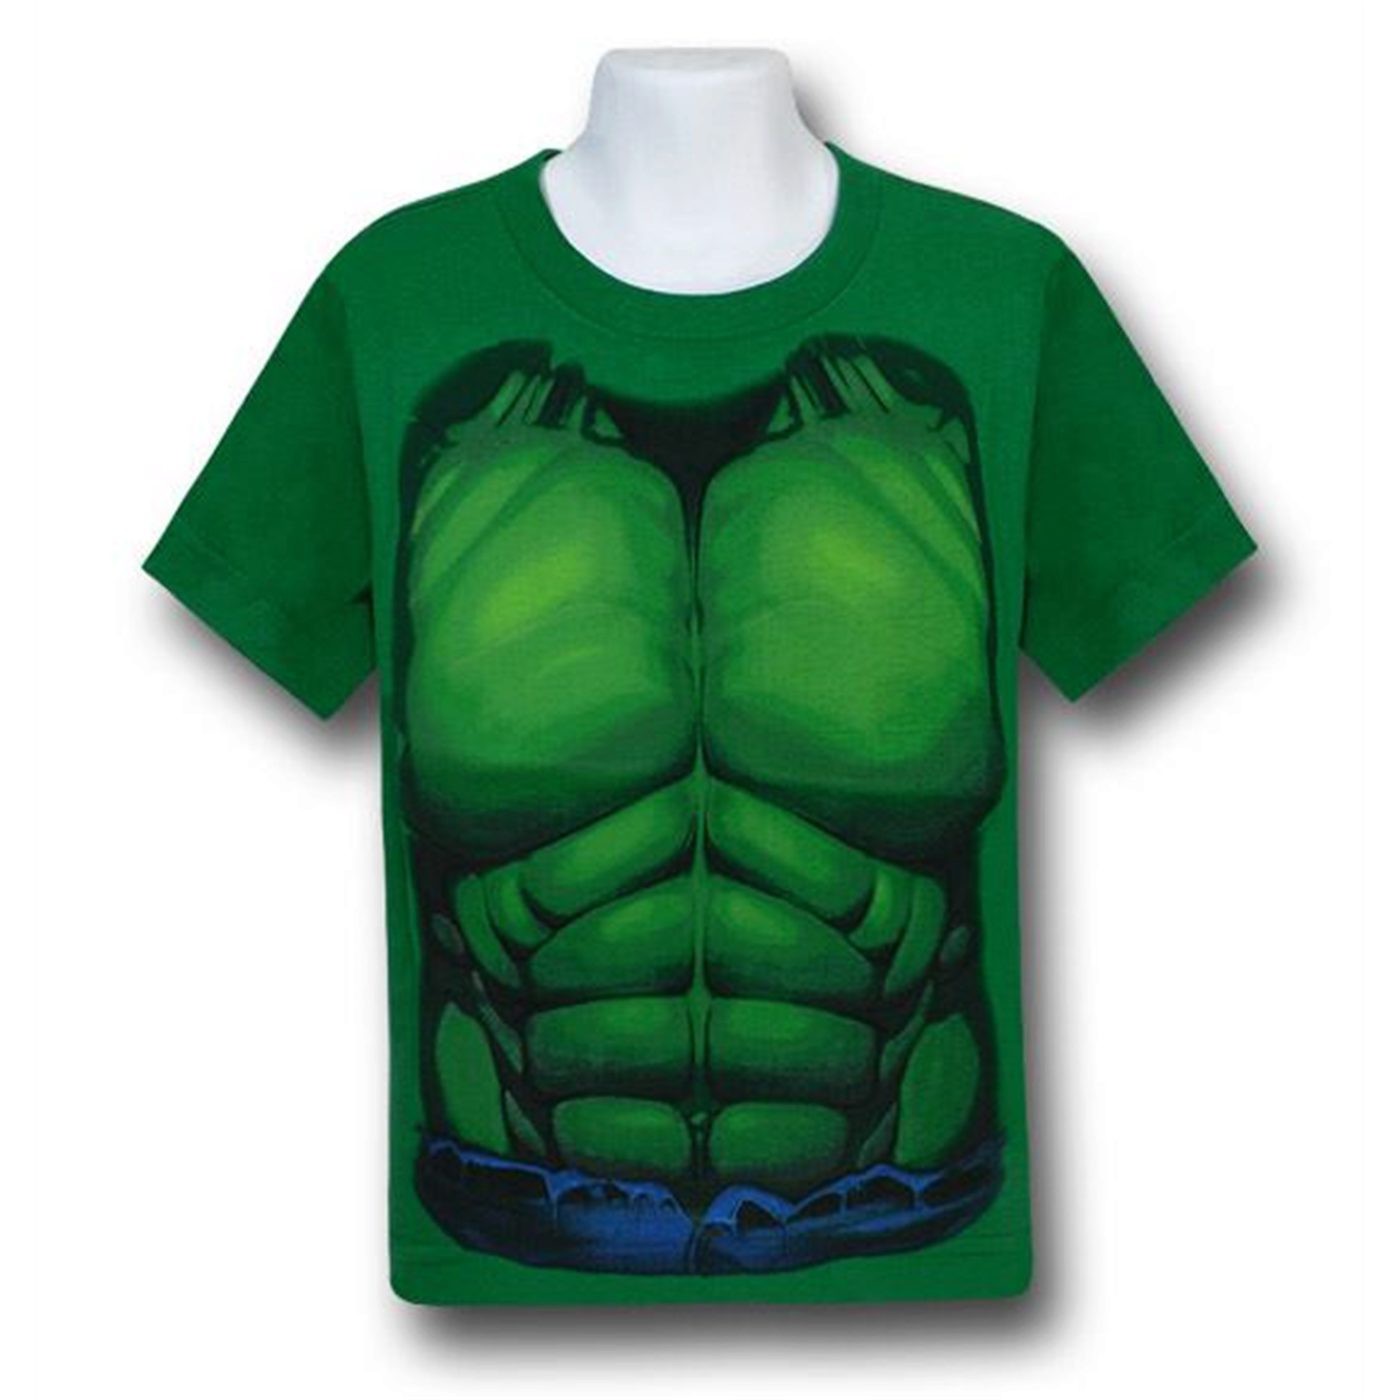 Lego Marvel 'Hulk' Childs T-Shirt 6 Colours Sizes 1-15 Yrs 